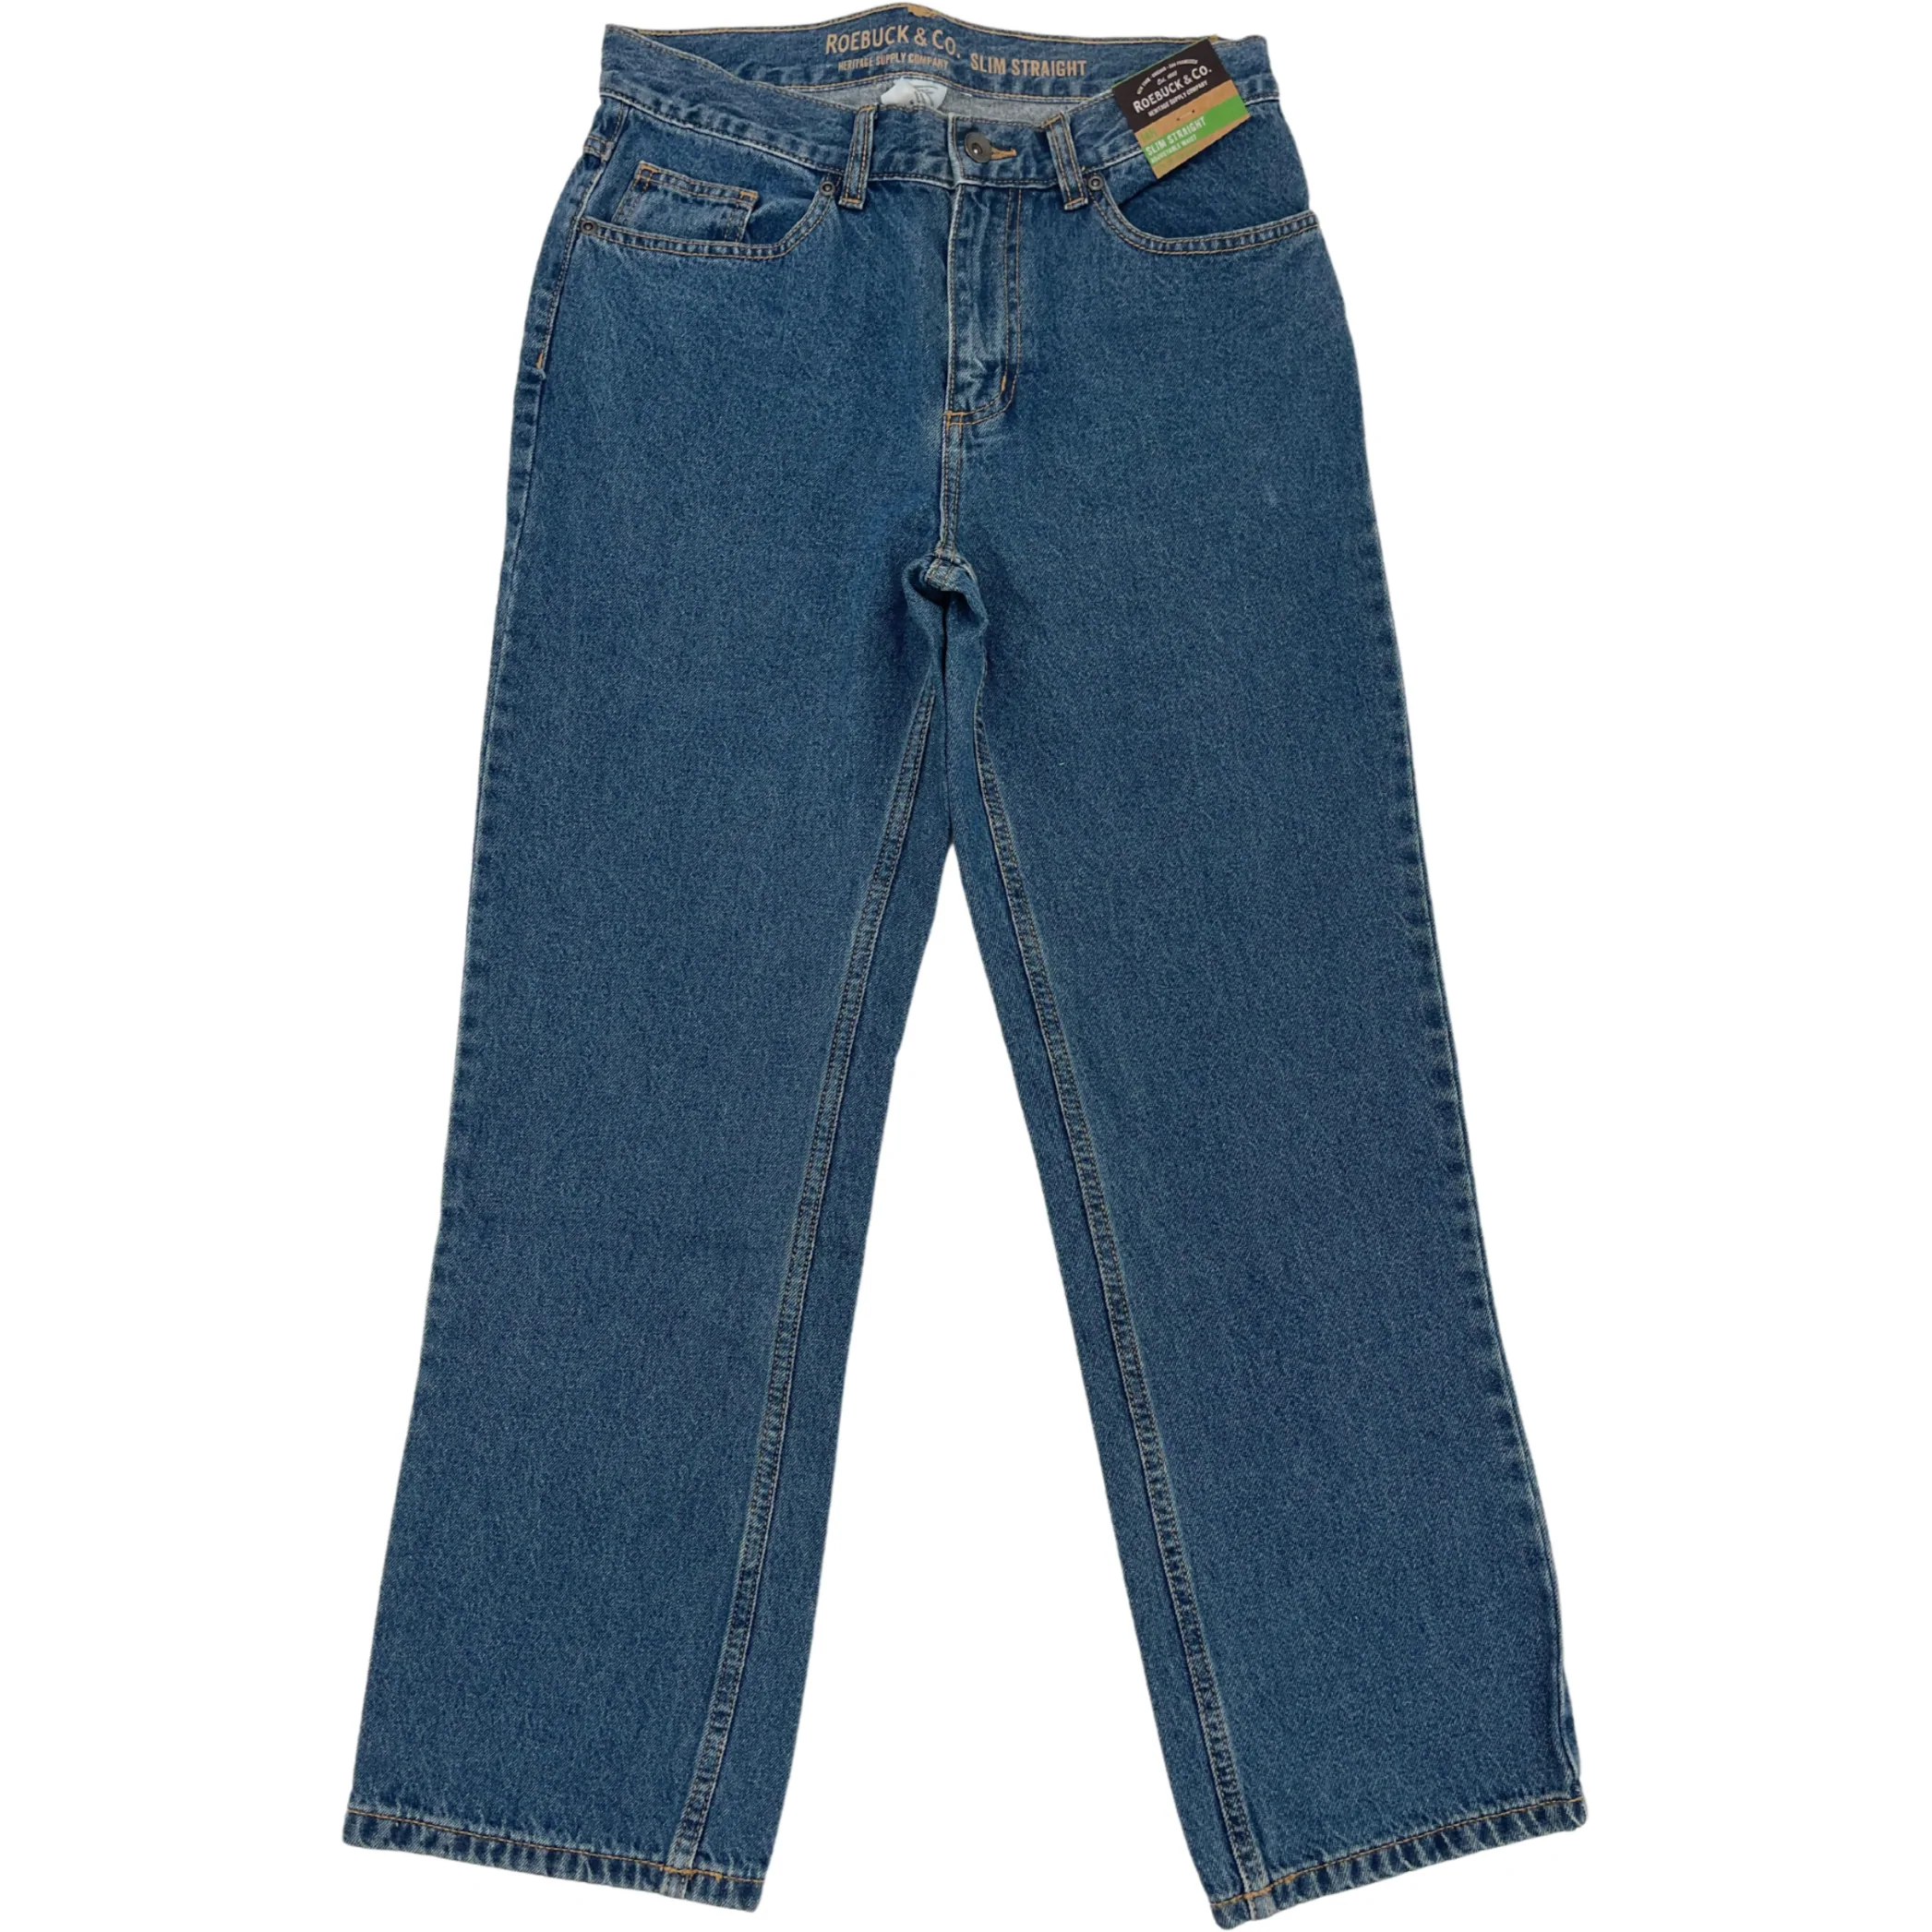 Roebuck & Co. Boy's Jeans / Slim Straight / Light Wash / Adjustable Waist / Size 14H